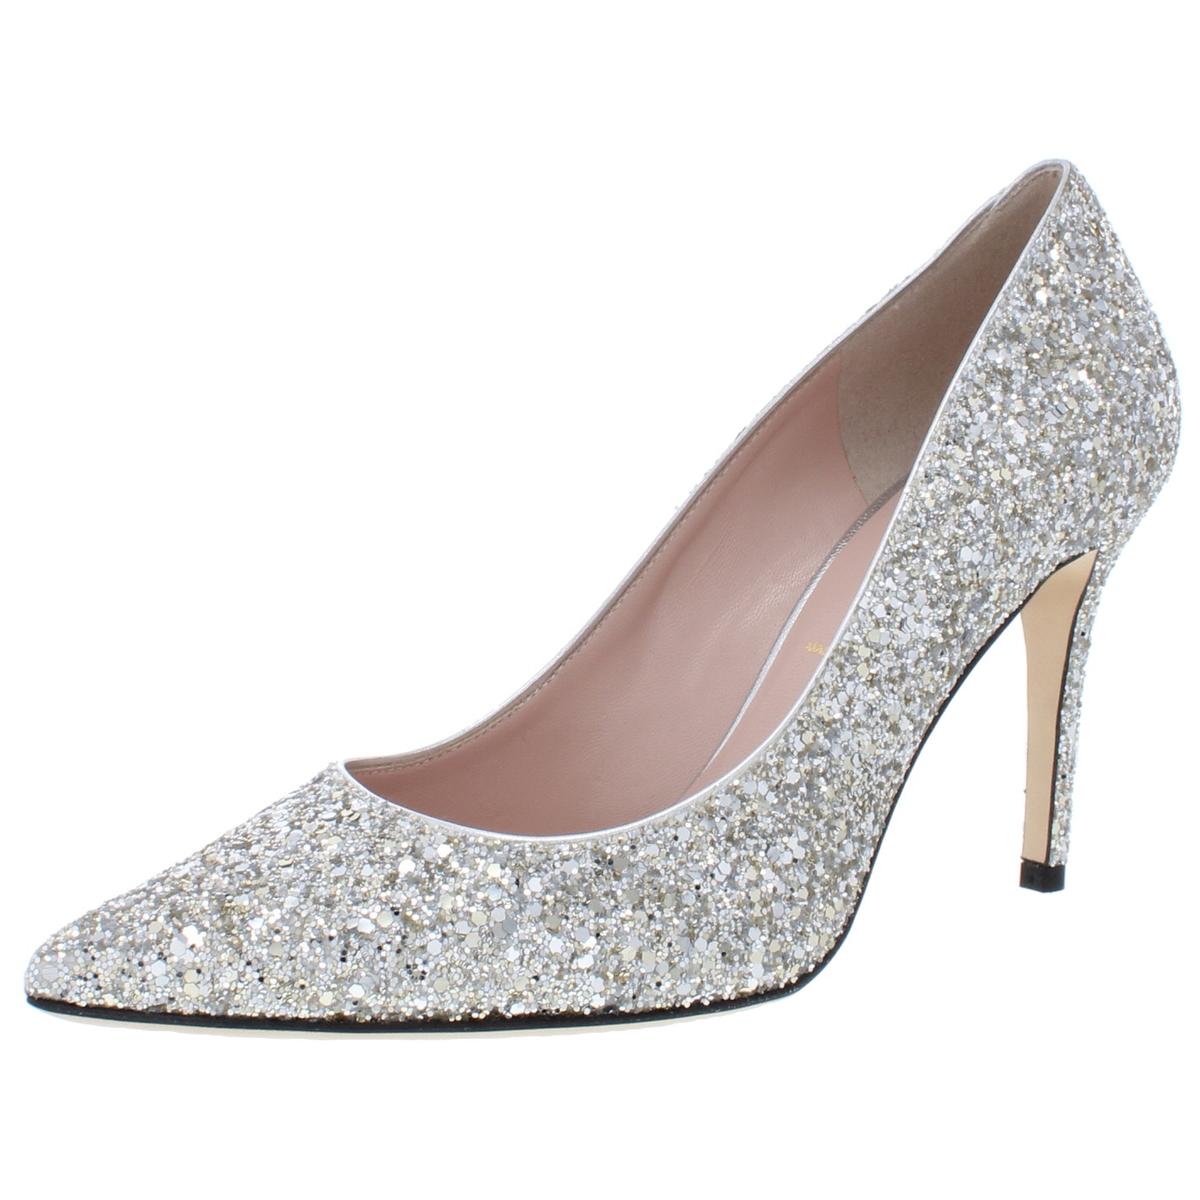 Kate Spade Womens Vivian Silver Evening Heels Shoes 7 Medium (B,M) BHFO ...